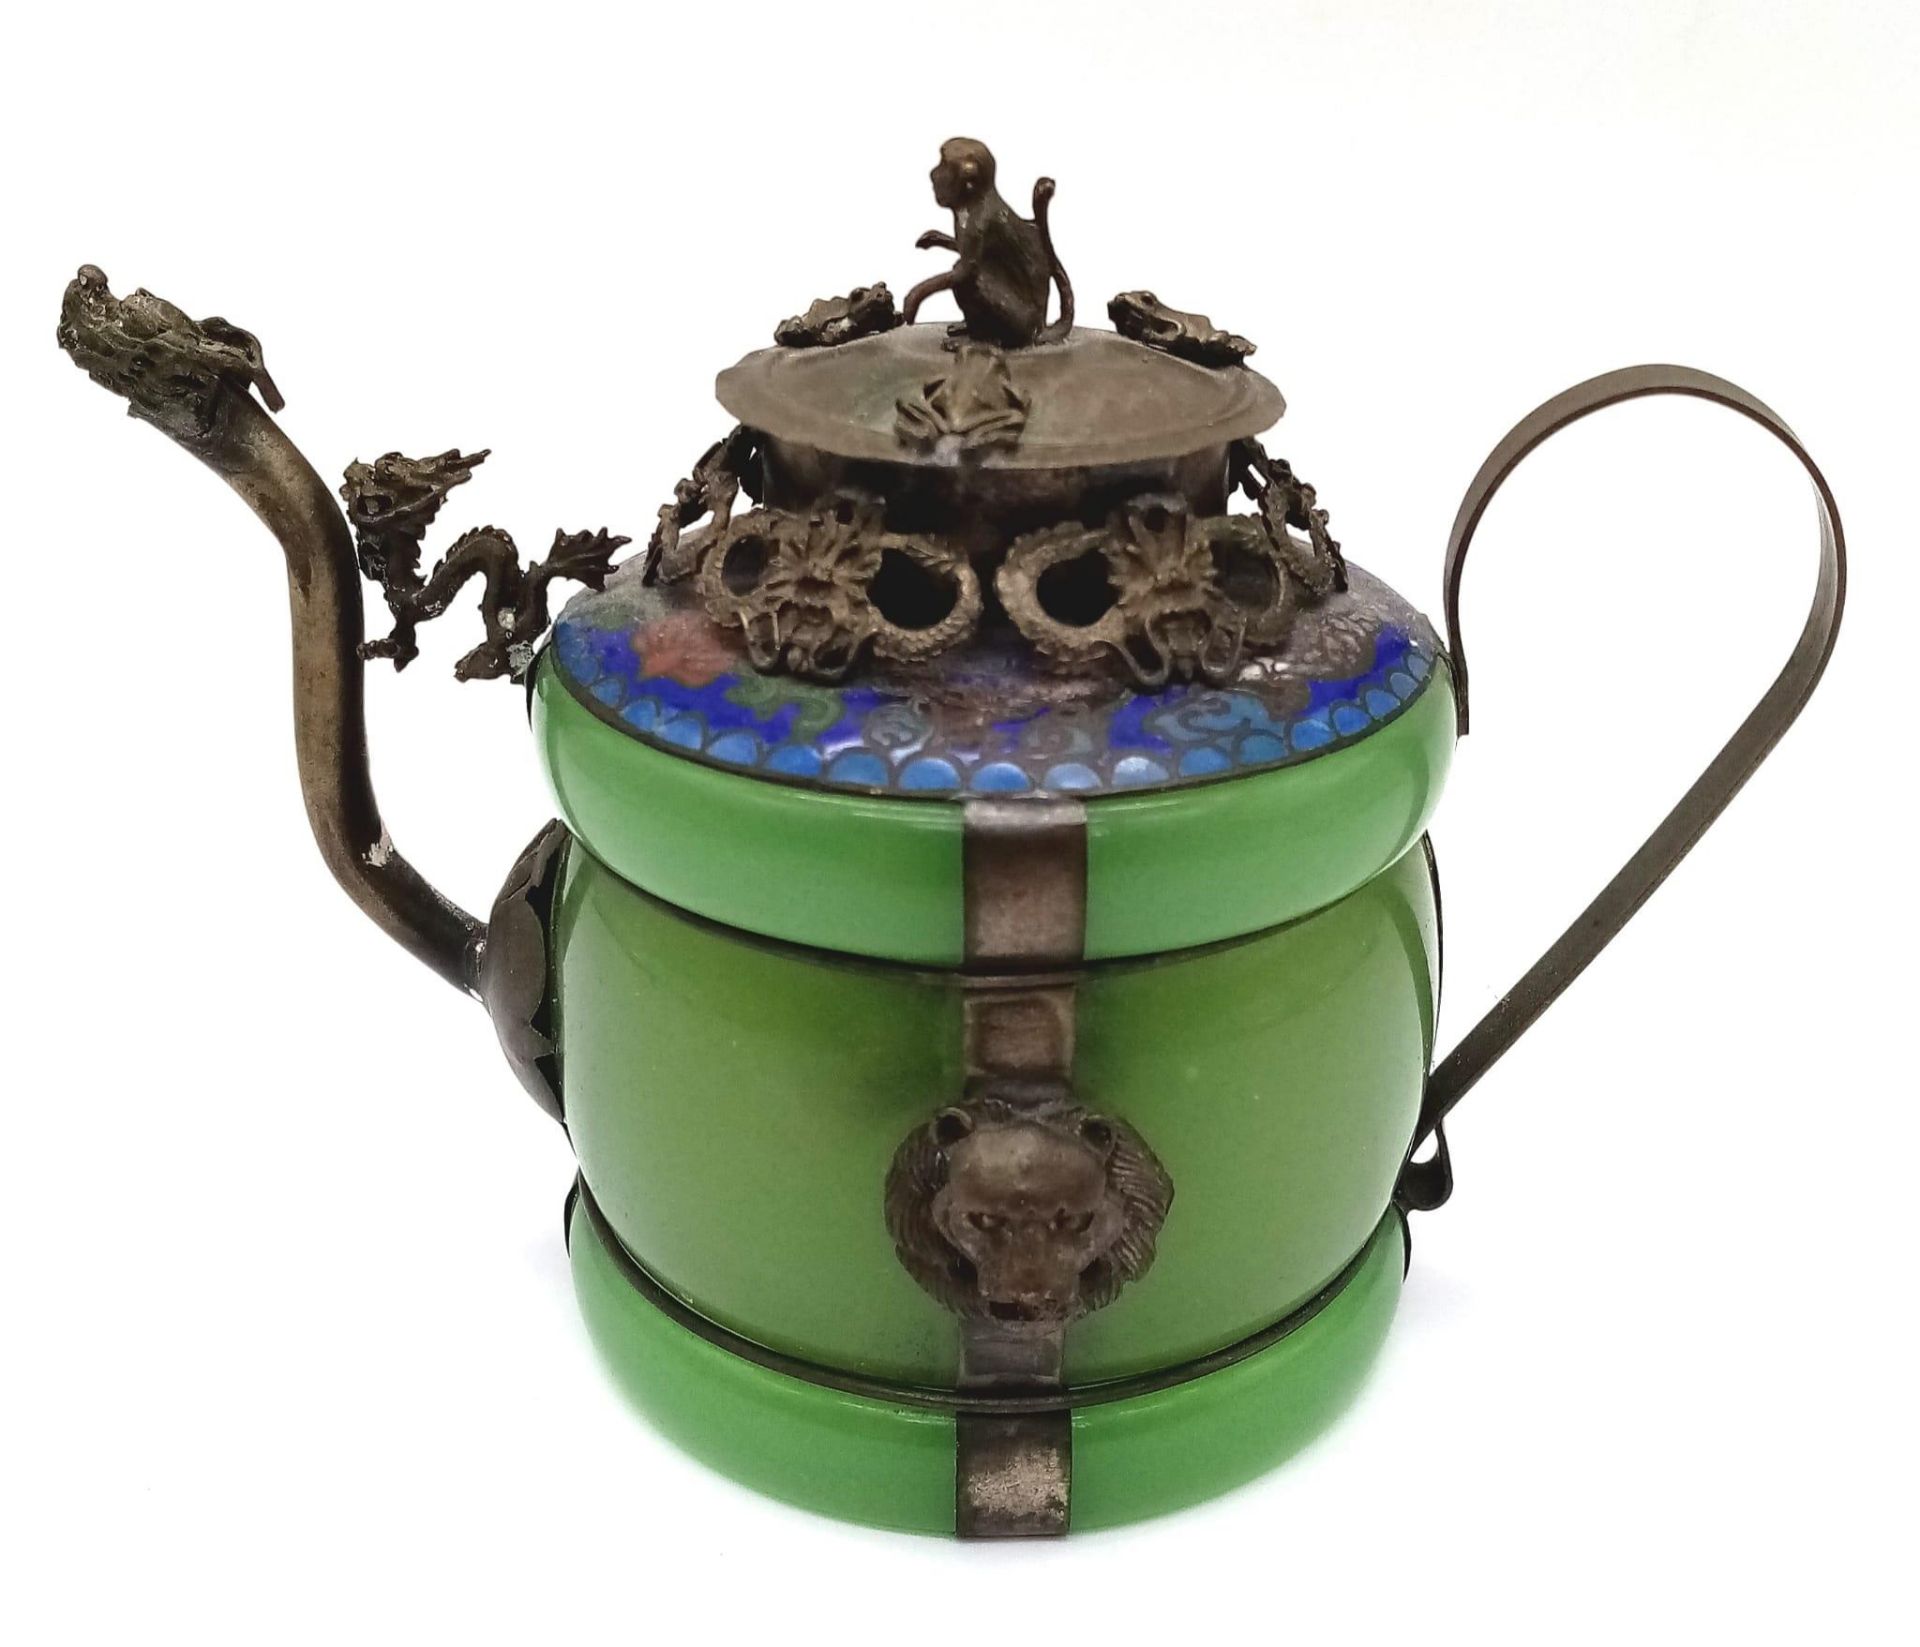 An Ornamental Oriental Jade Teapot with Antique Silver Trim. 11cm Height.